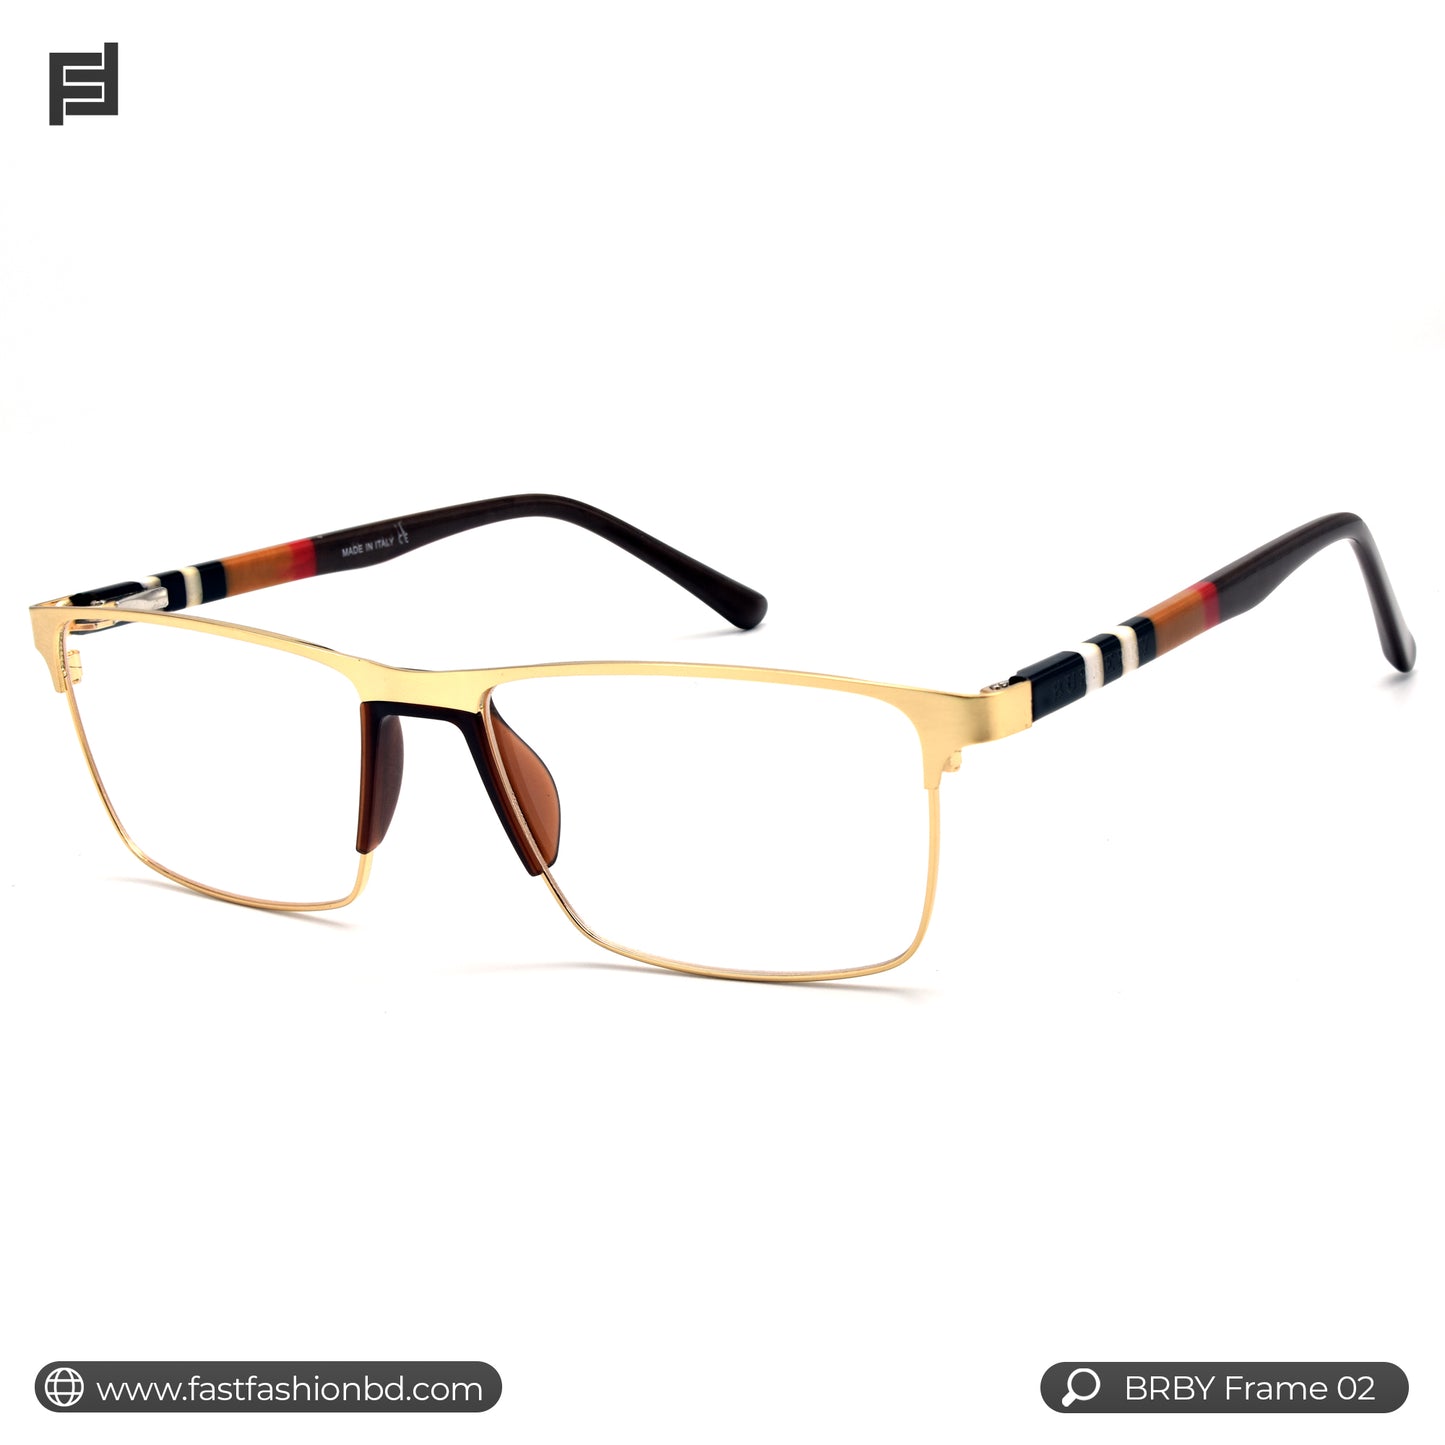 Premium Quality Eyeglass Optic Frame - BRBY Frame 02